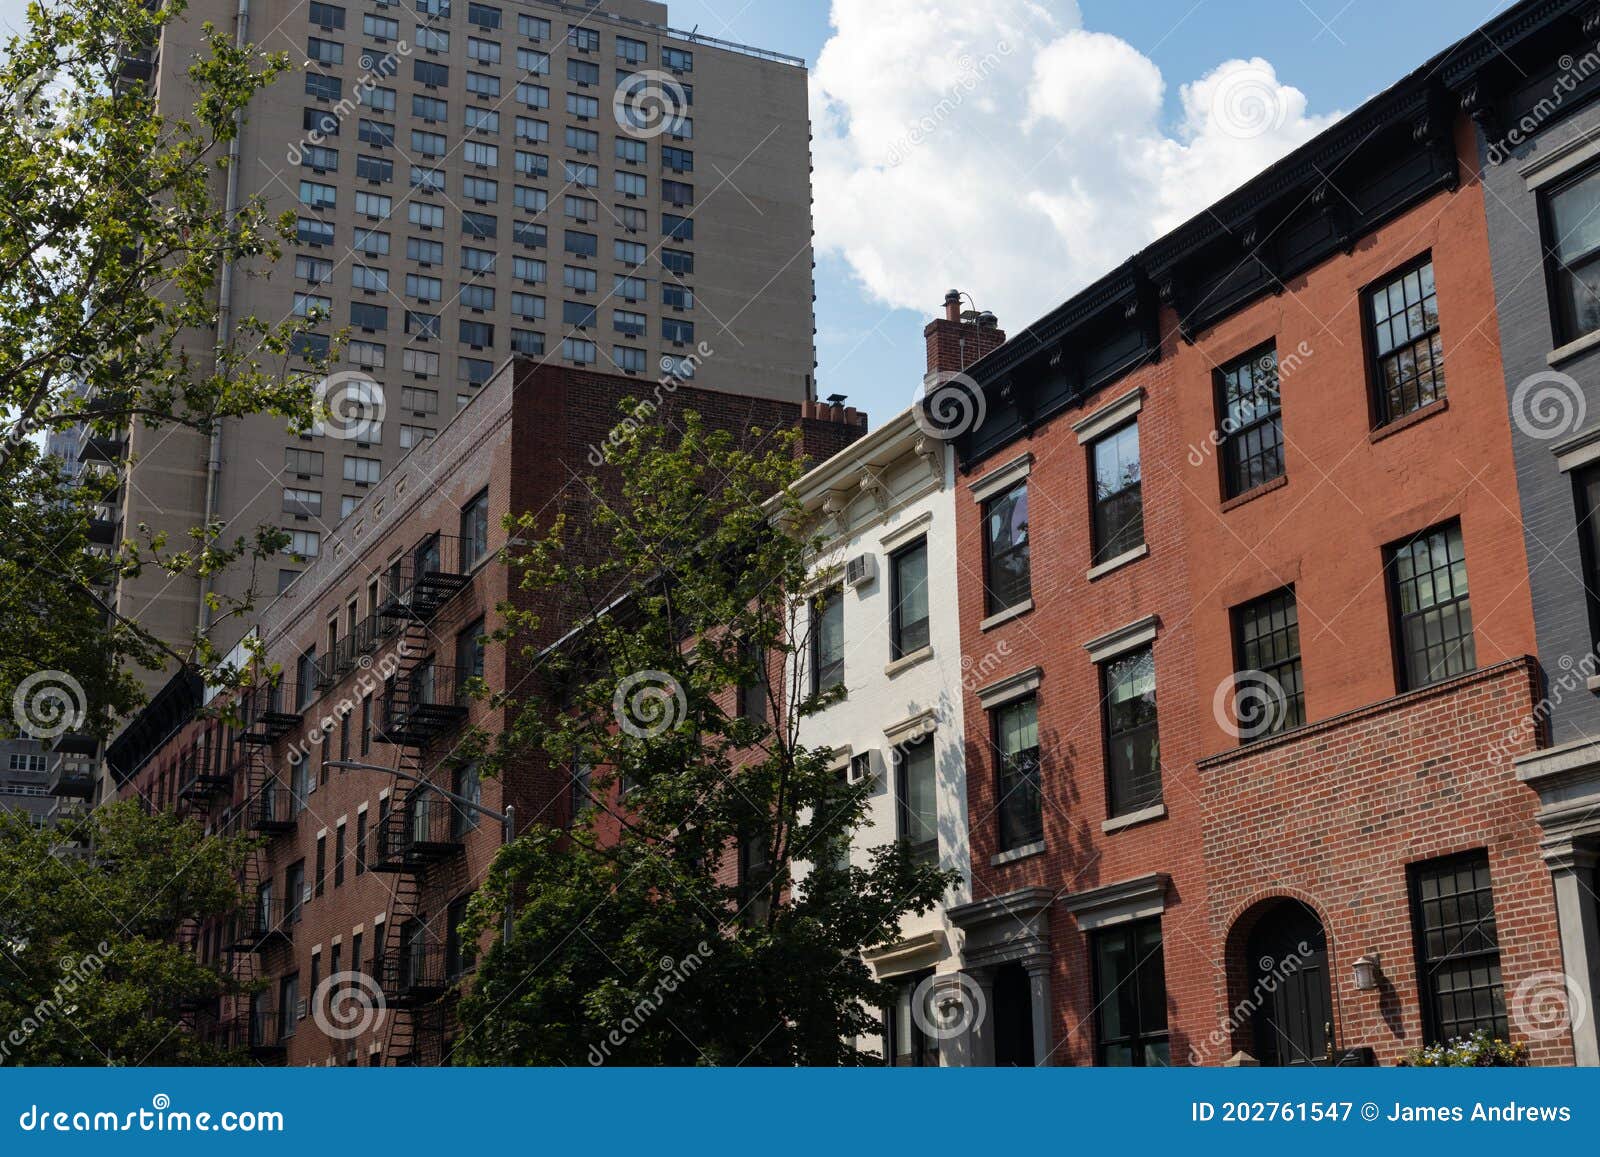 row of old brick residential buildings in kips bay of new york city